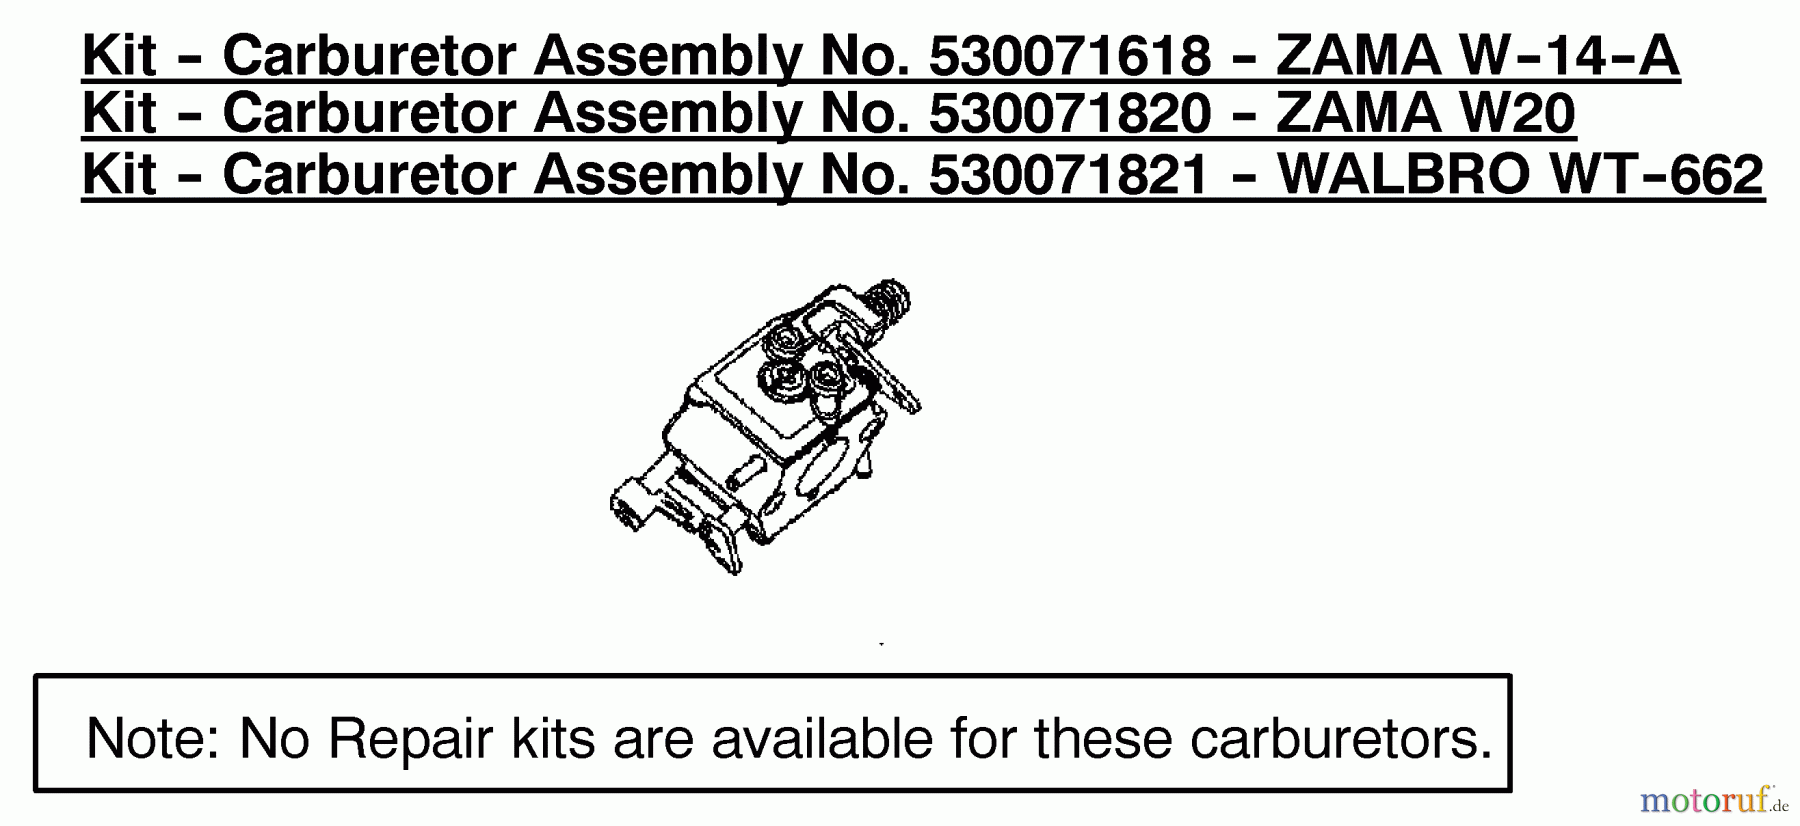  Poulan / Weed Eater Motorsägen 1975 (Type 5) - Poulan Woodshark Chainsaw Carburetor Assembly (Walbro WT-662) P/N 530071821